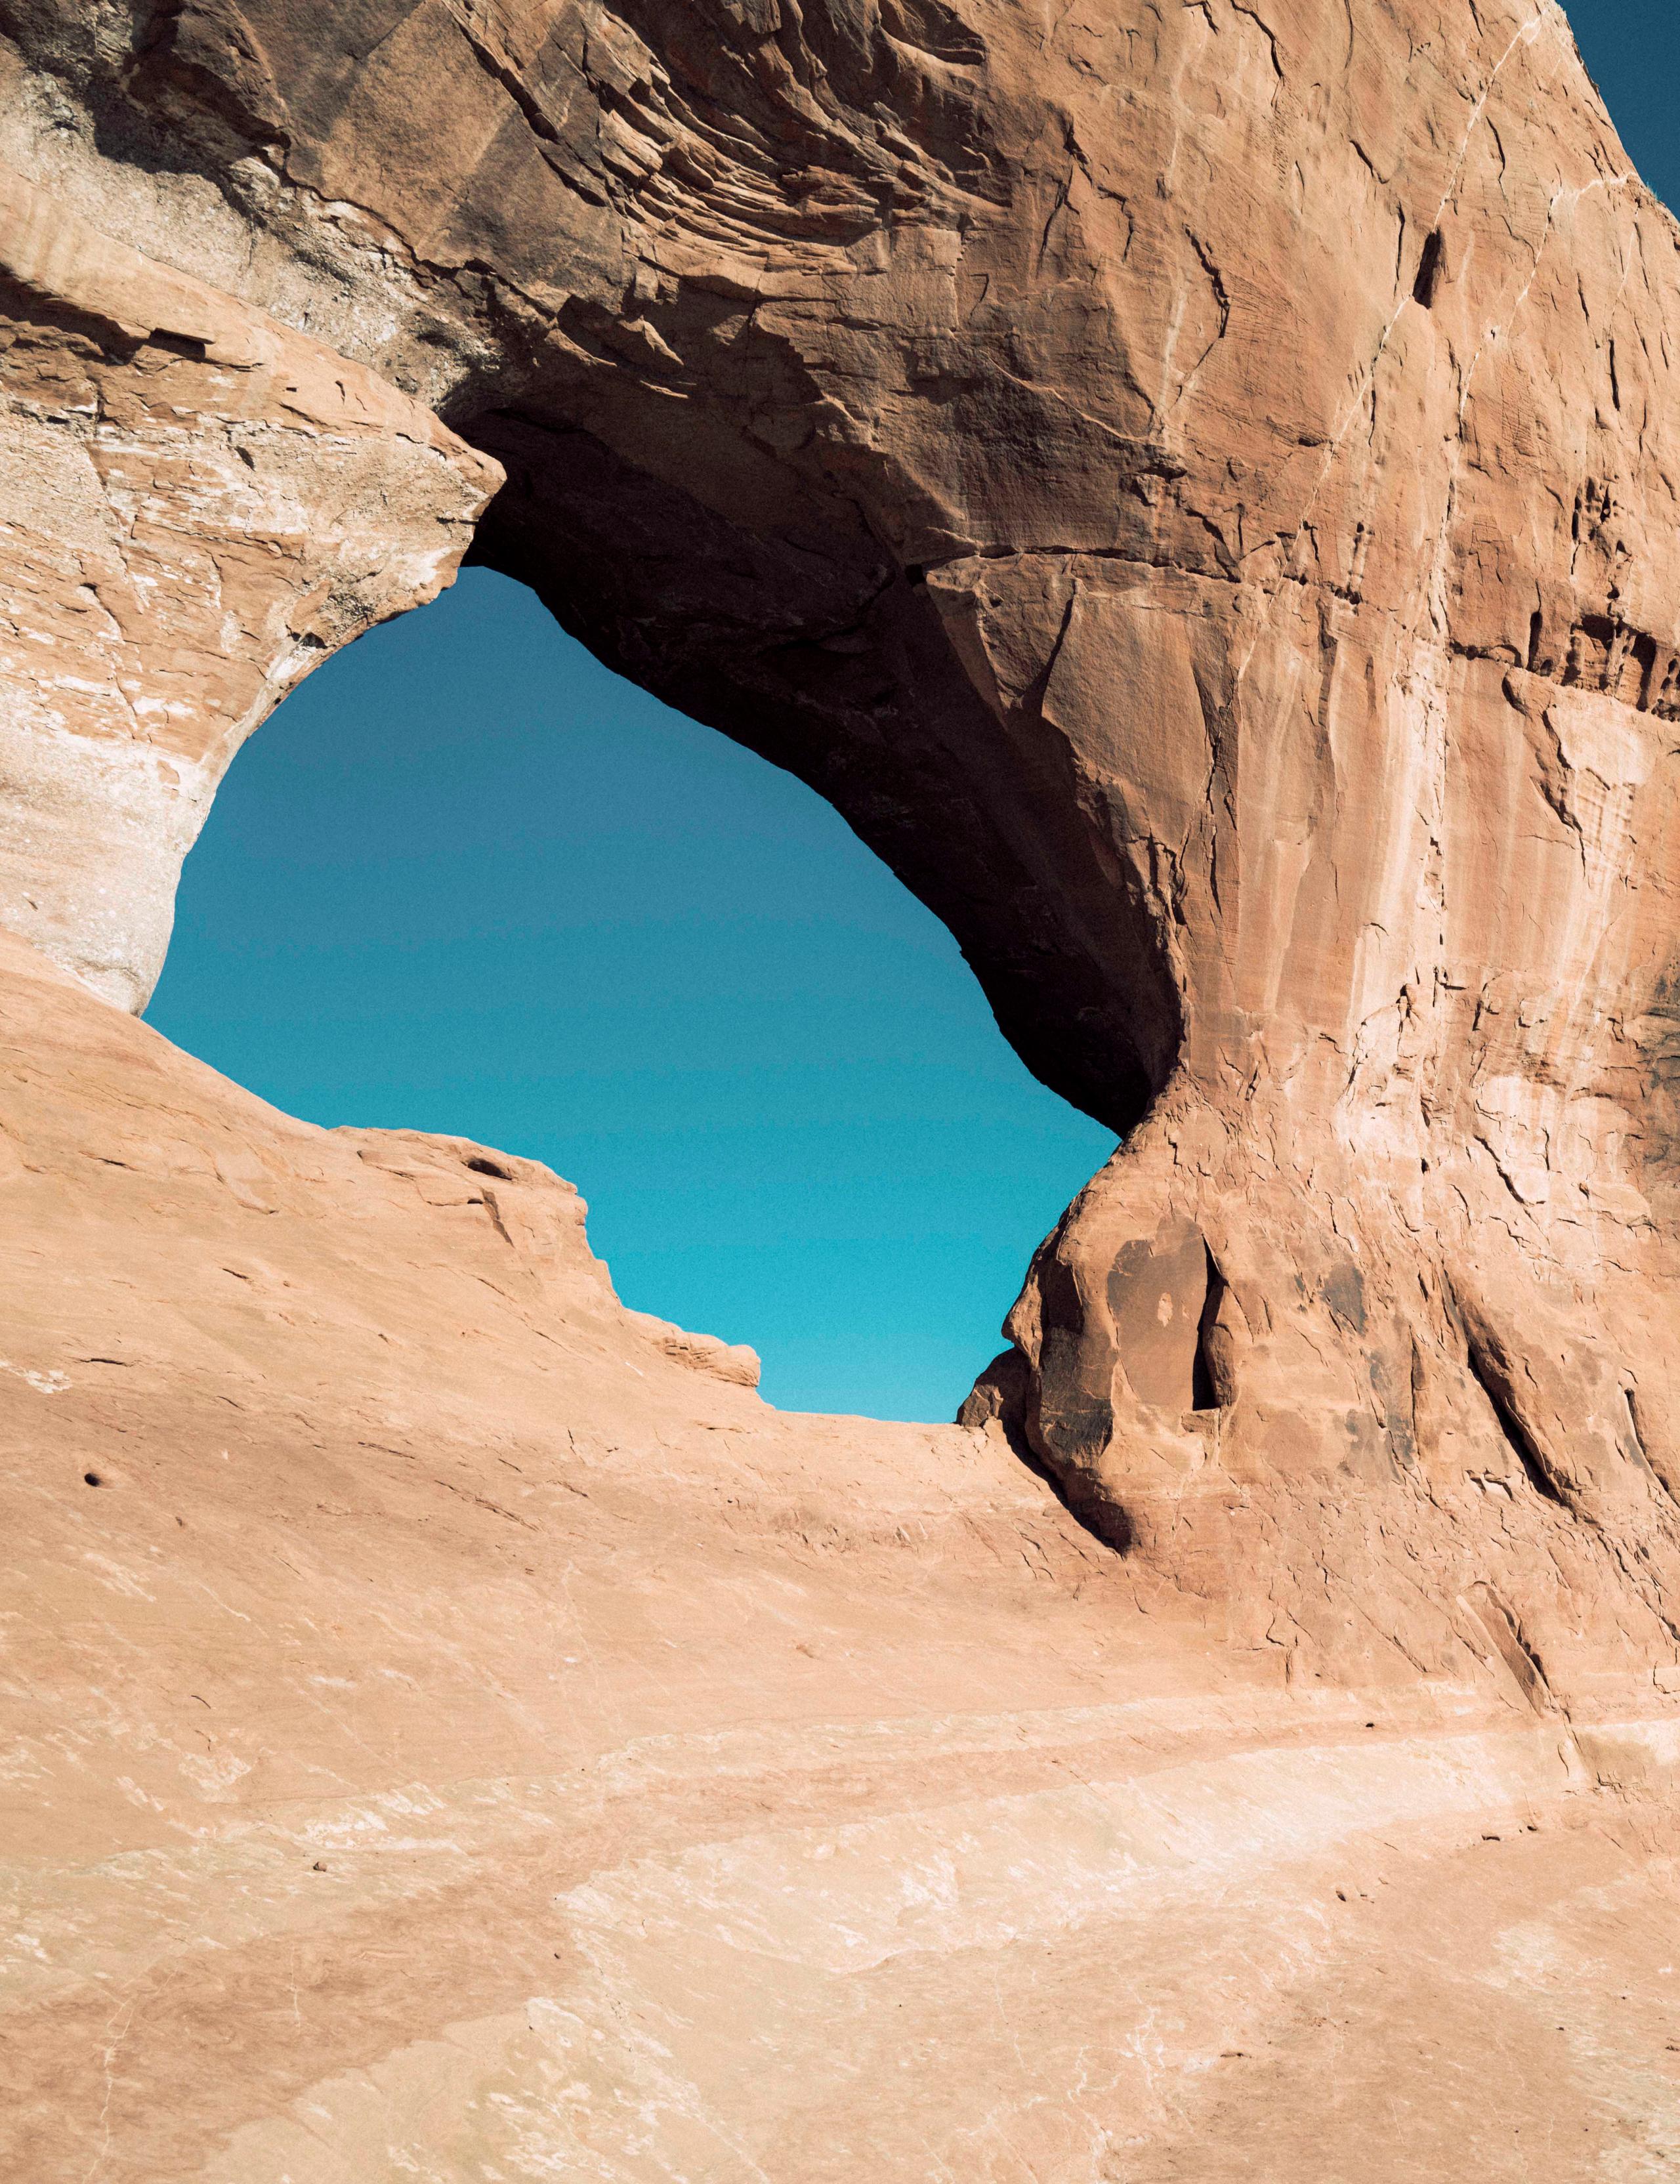 Keyhole rock formation in Moab, Utah